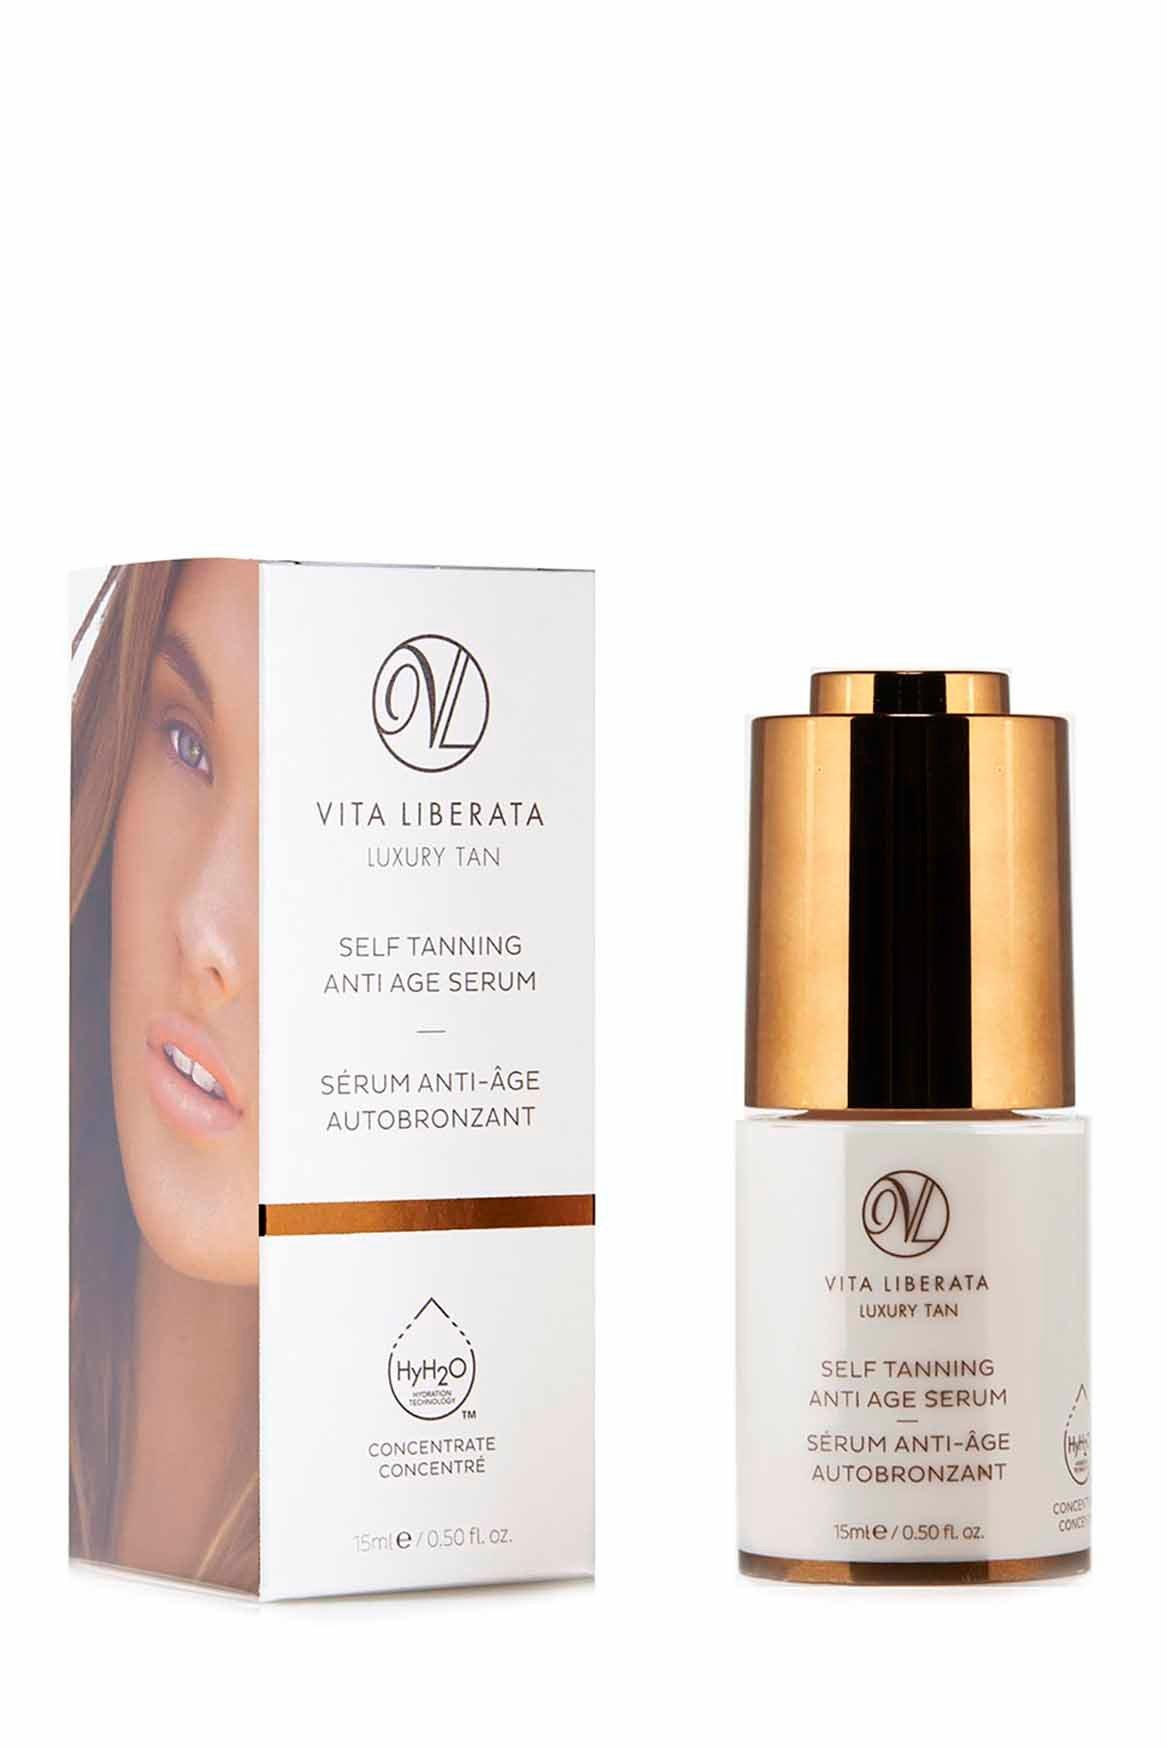 vita liberata self-tanning anti-age serum 15ml - natural